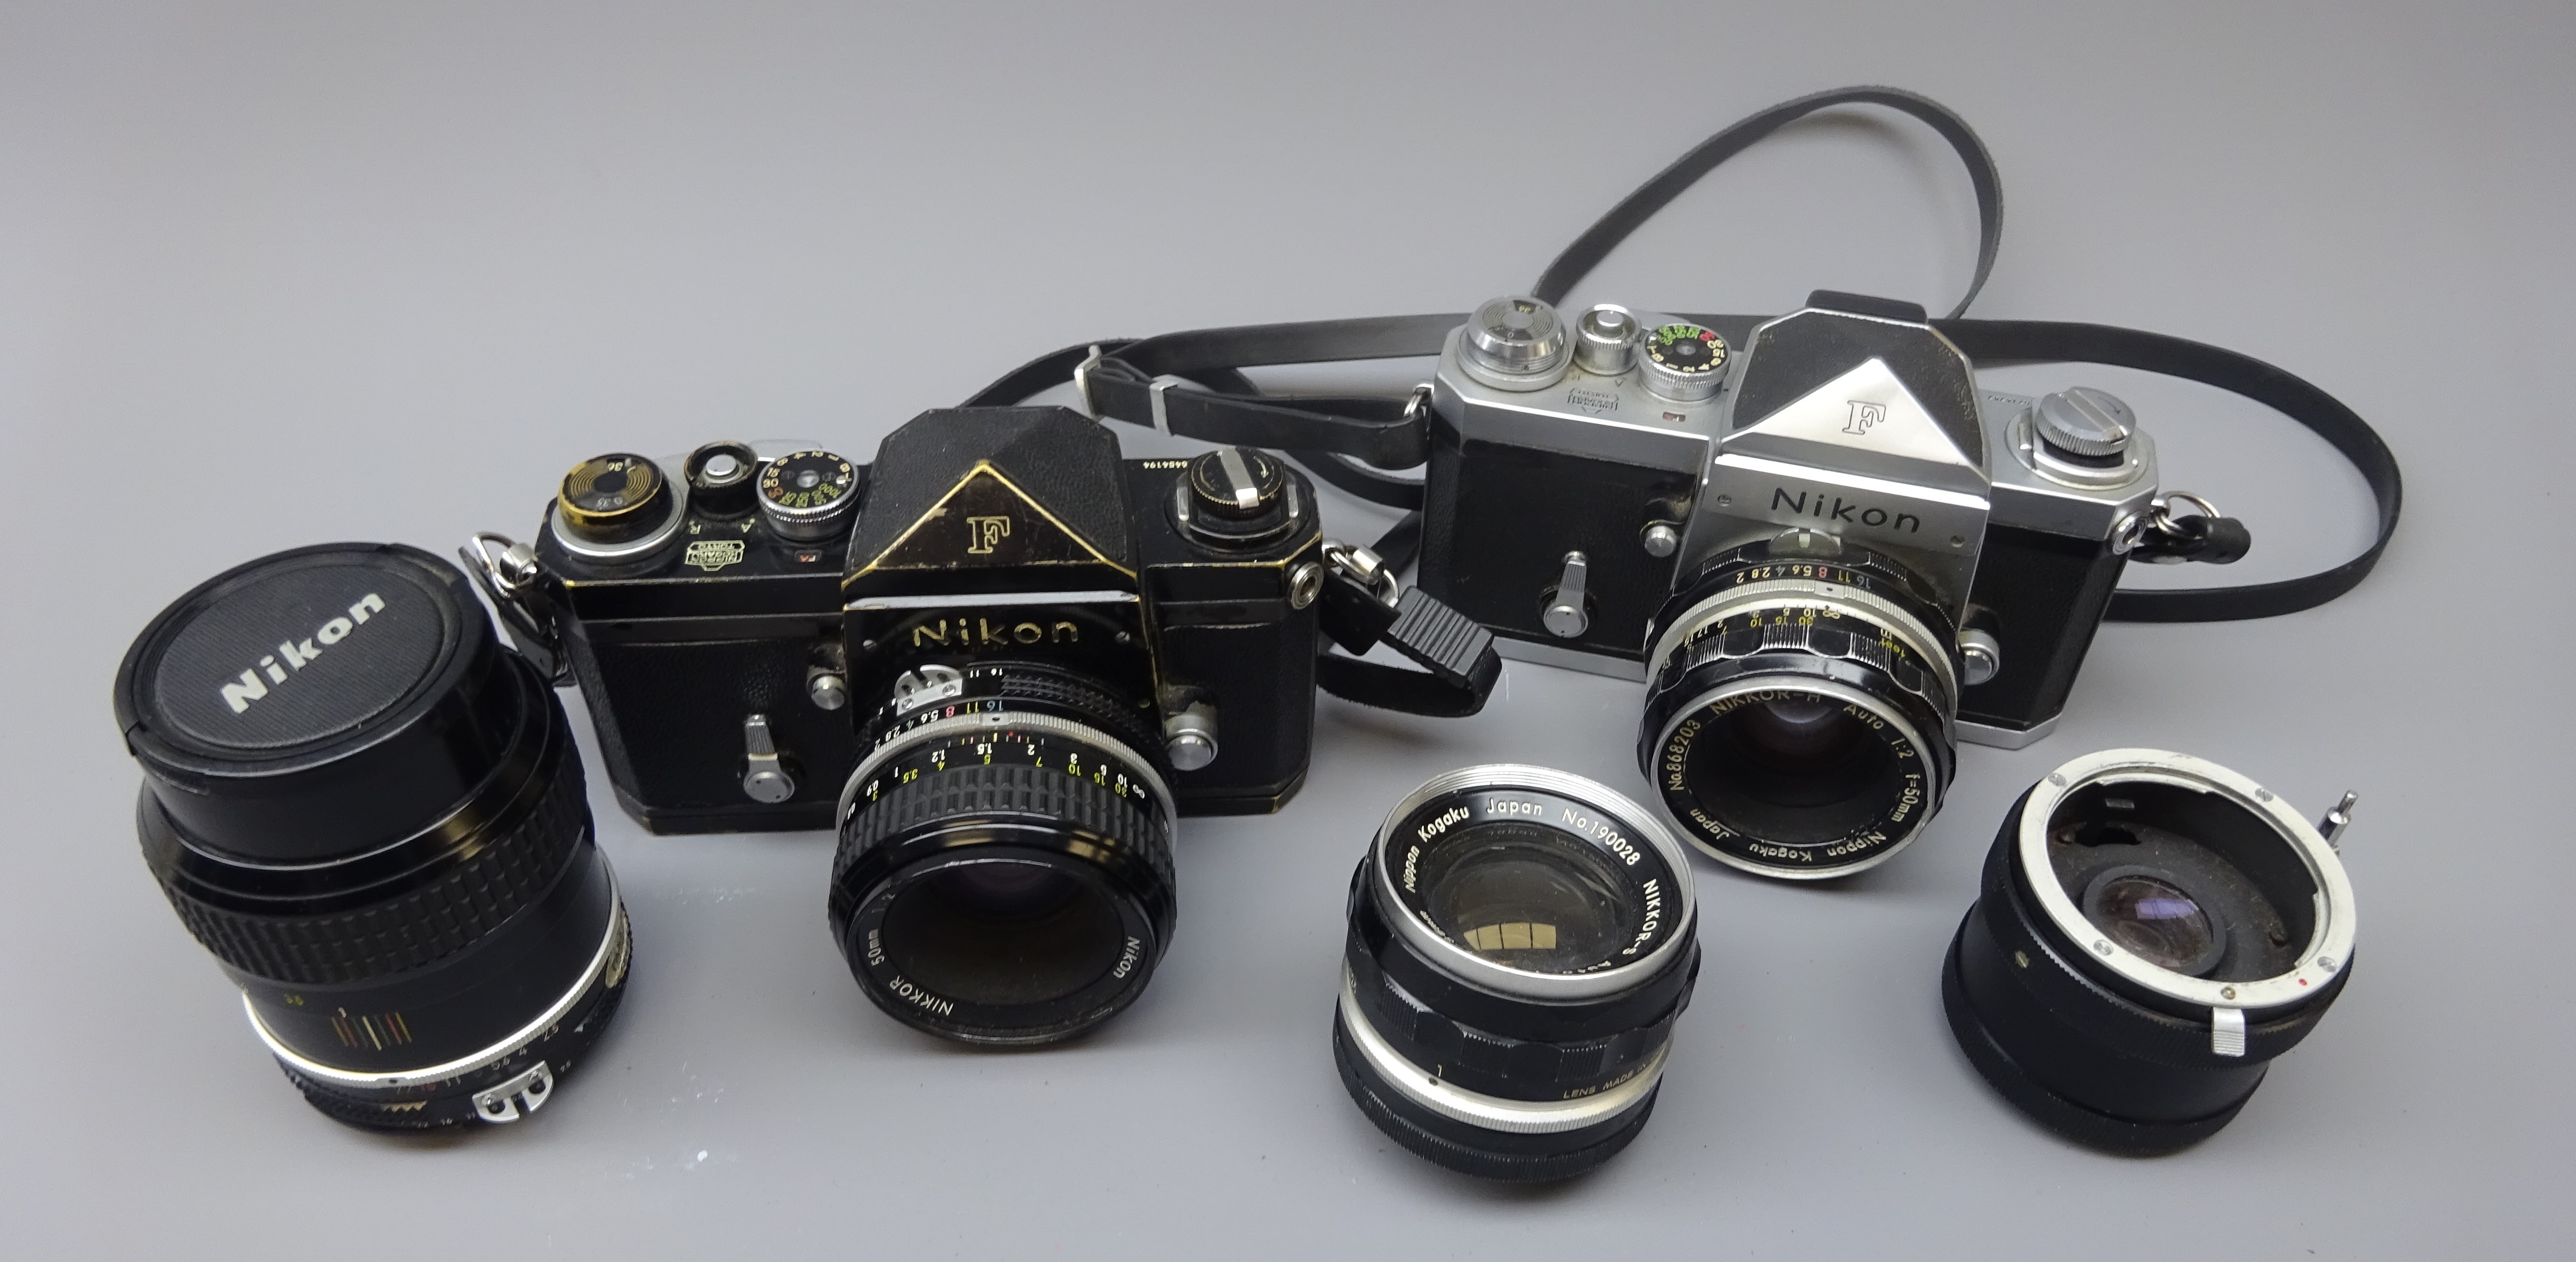 Nikon F camera No.6714747 with Nikkor-H Auto 1:2 f=50mm lens No.868203, a Nikon F black body No.